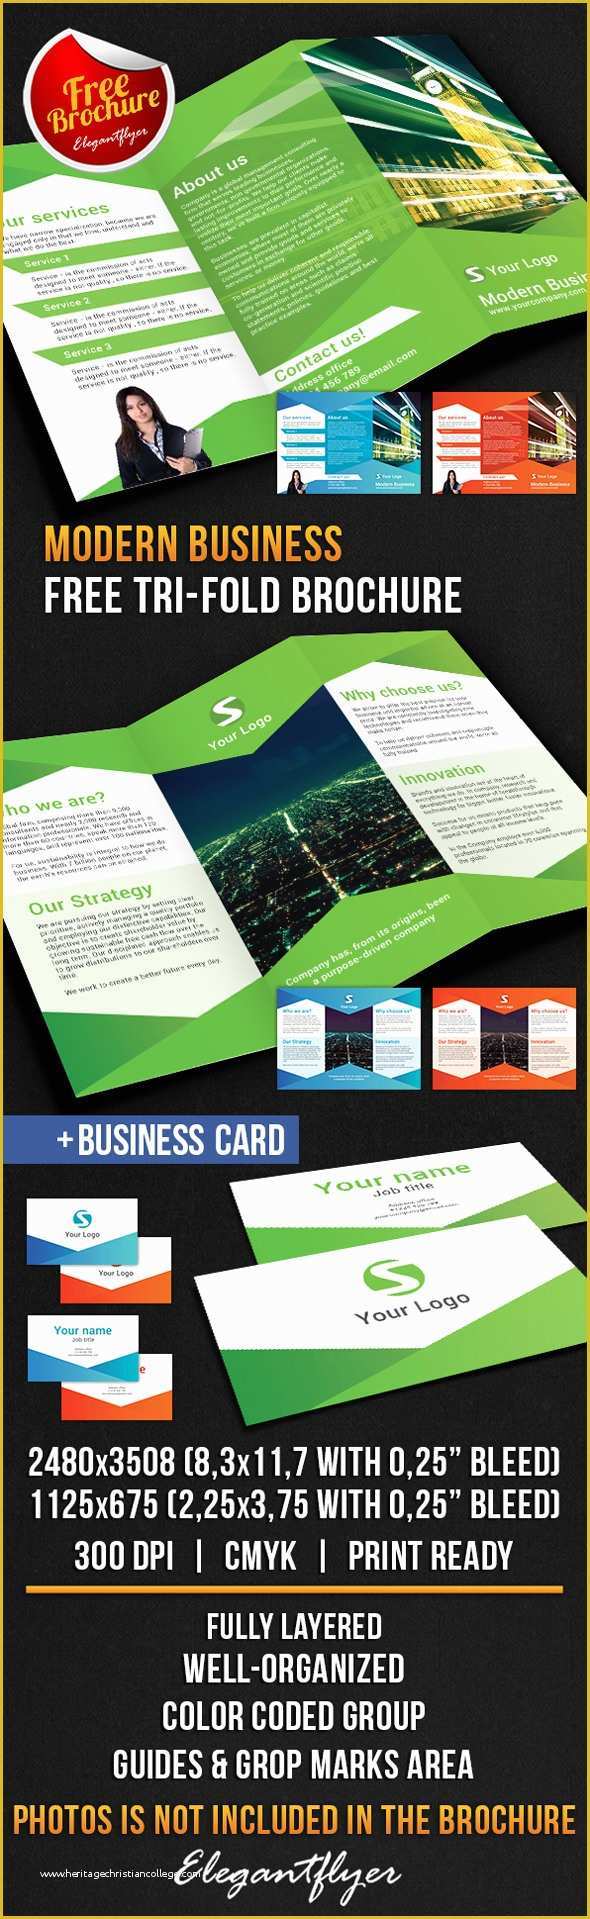 Tri Fold Brochure Template Psd Free Download Of 25 Best Free Psd Brochure Templates